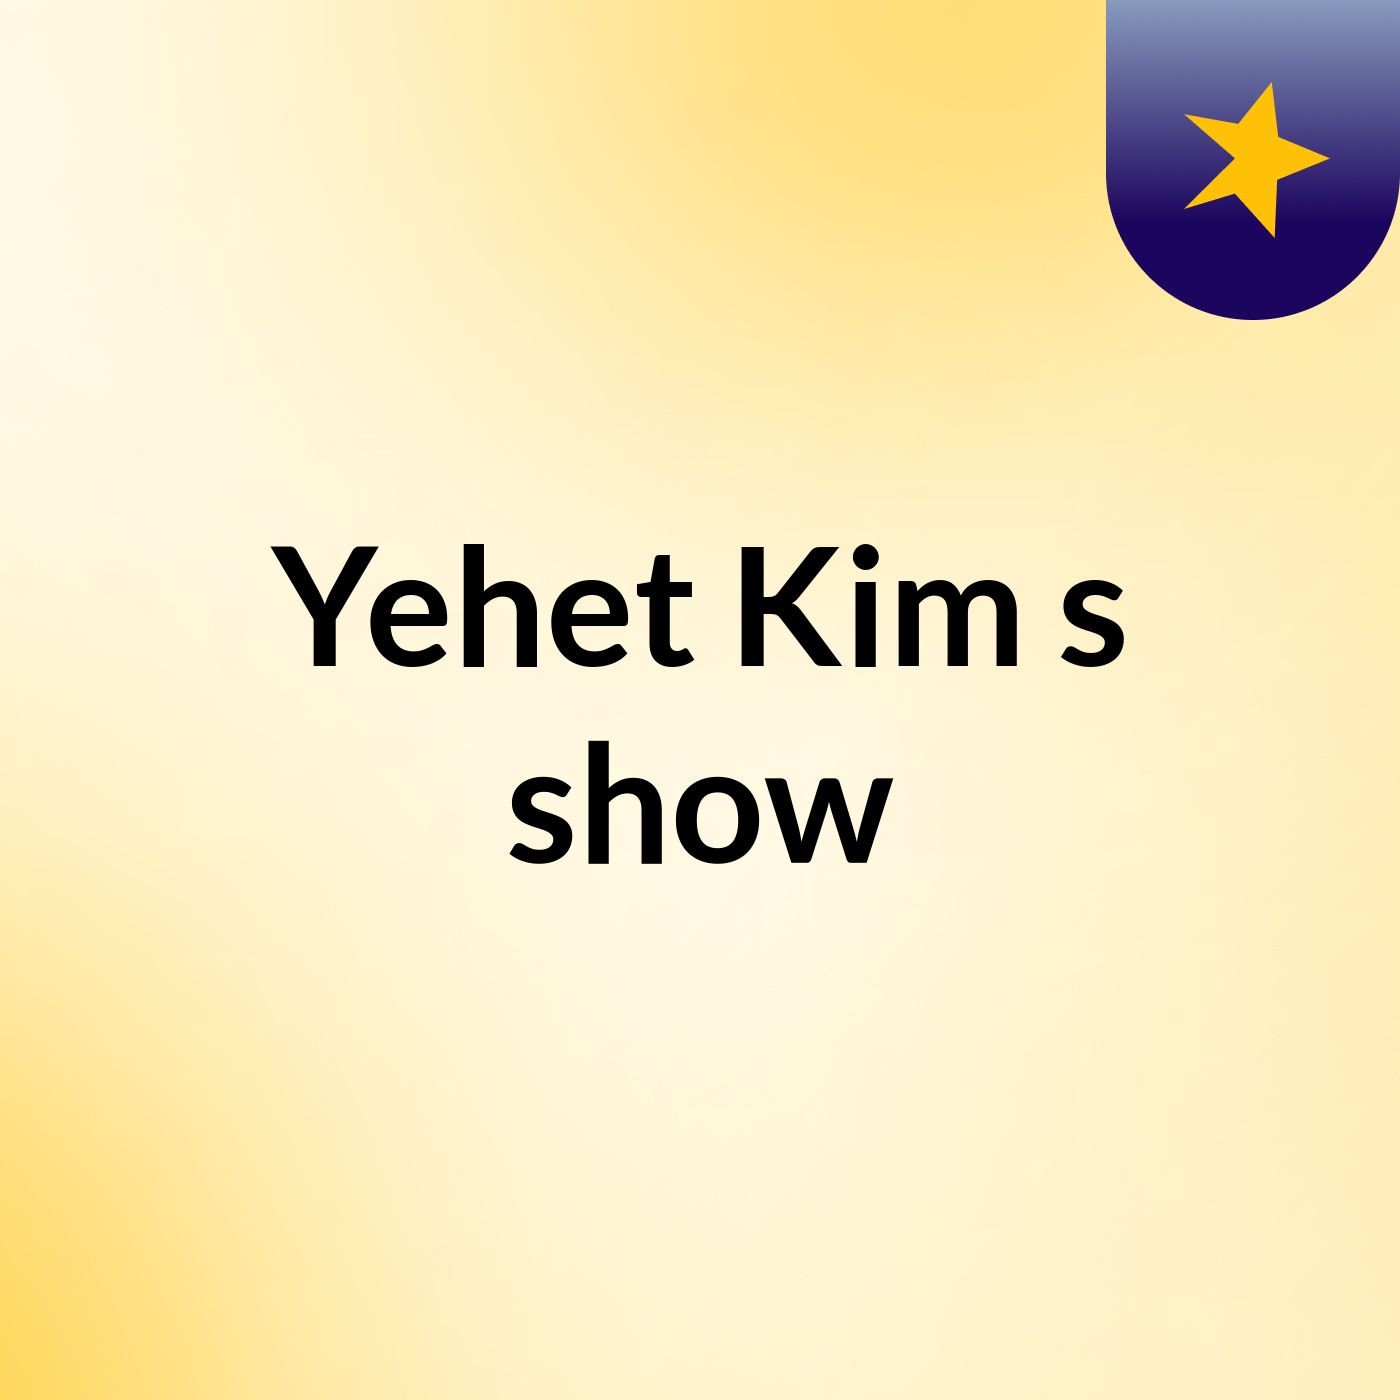 Yehet Kim's show